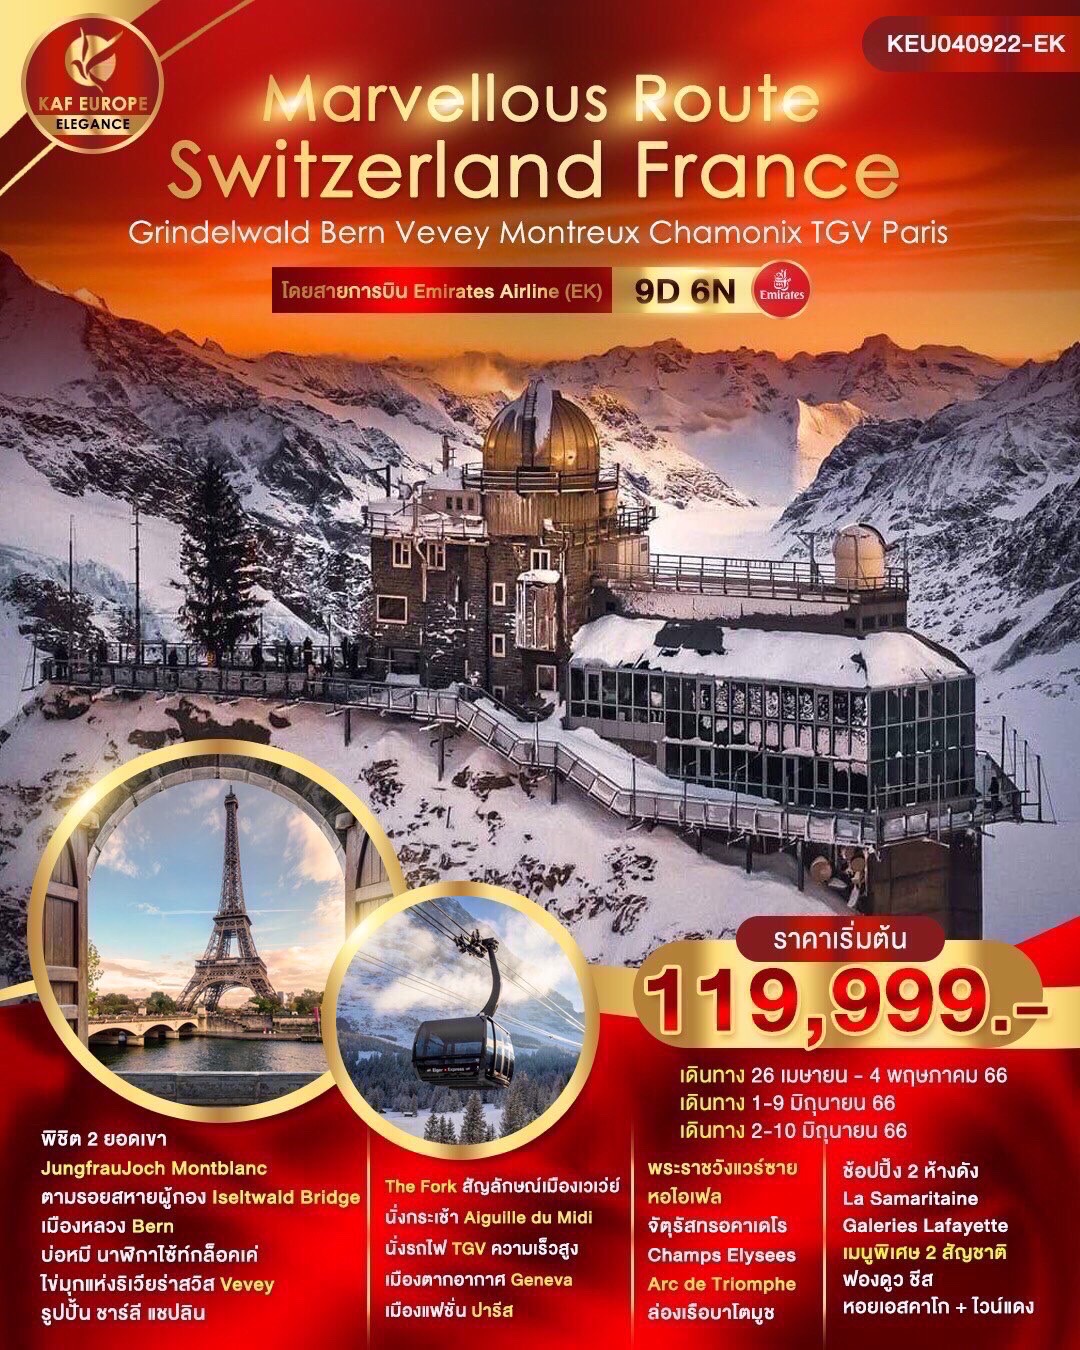  Marvellous Route Switzerland France